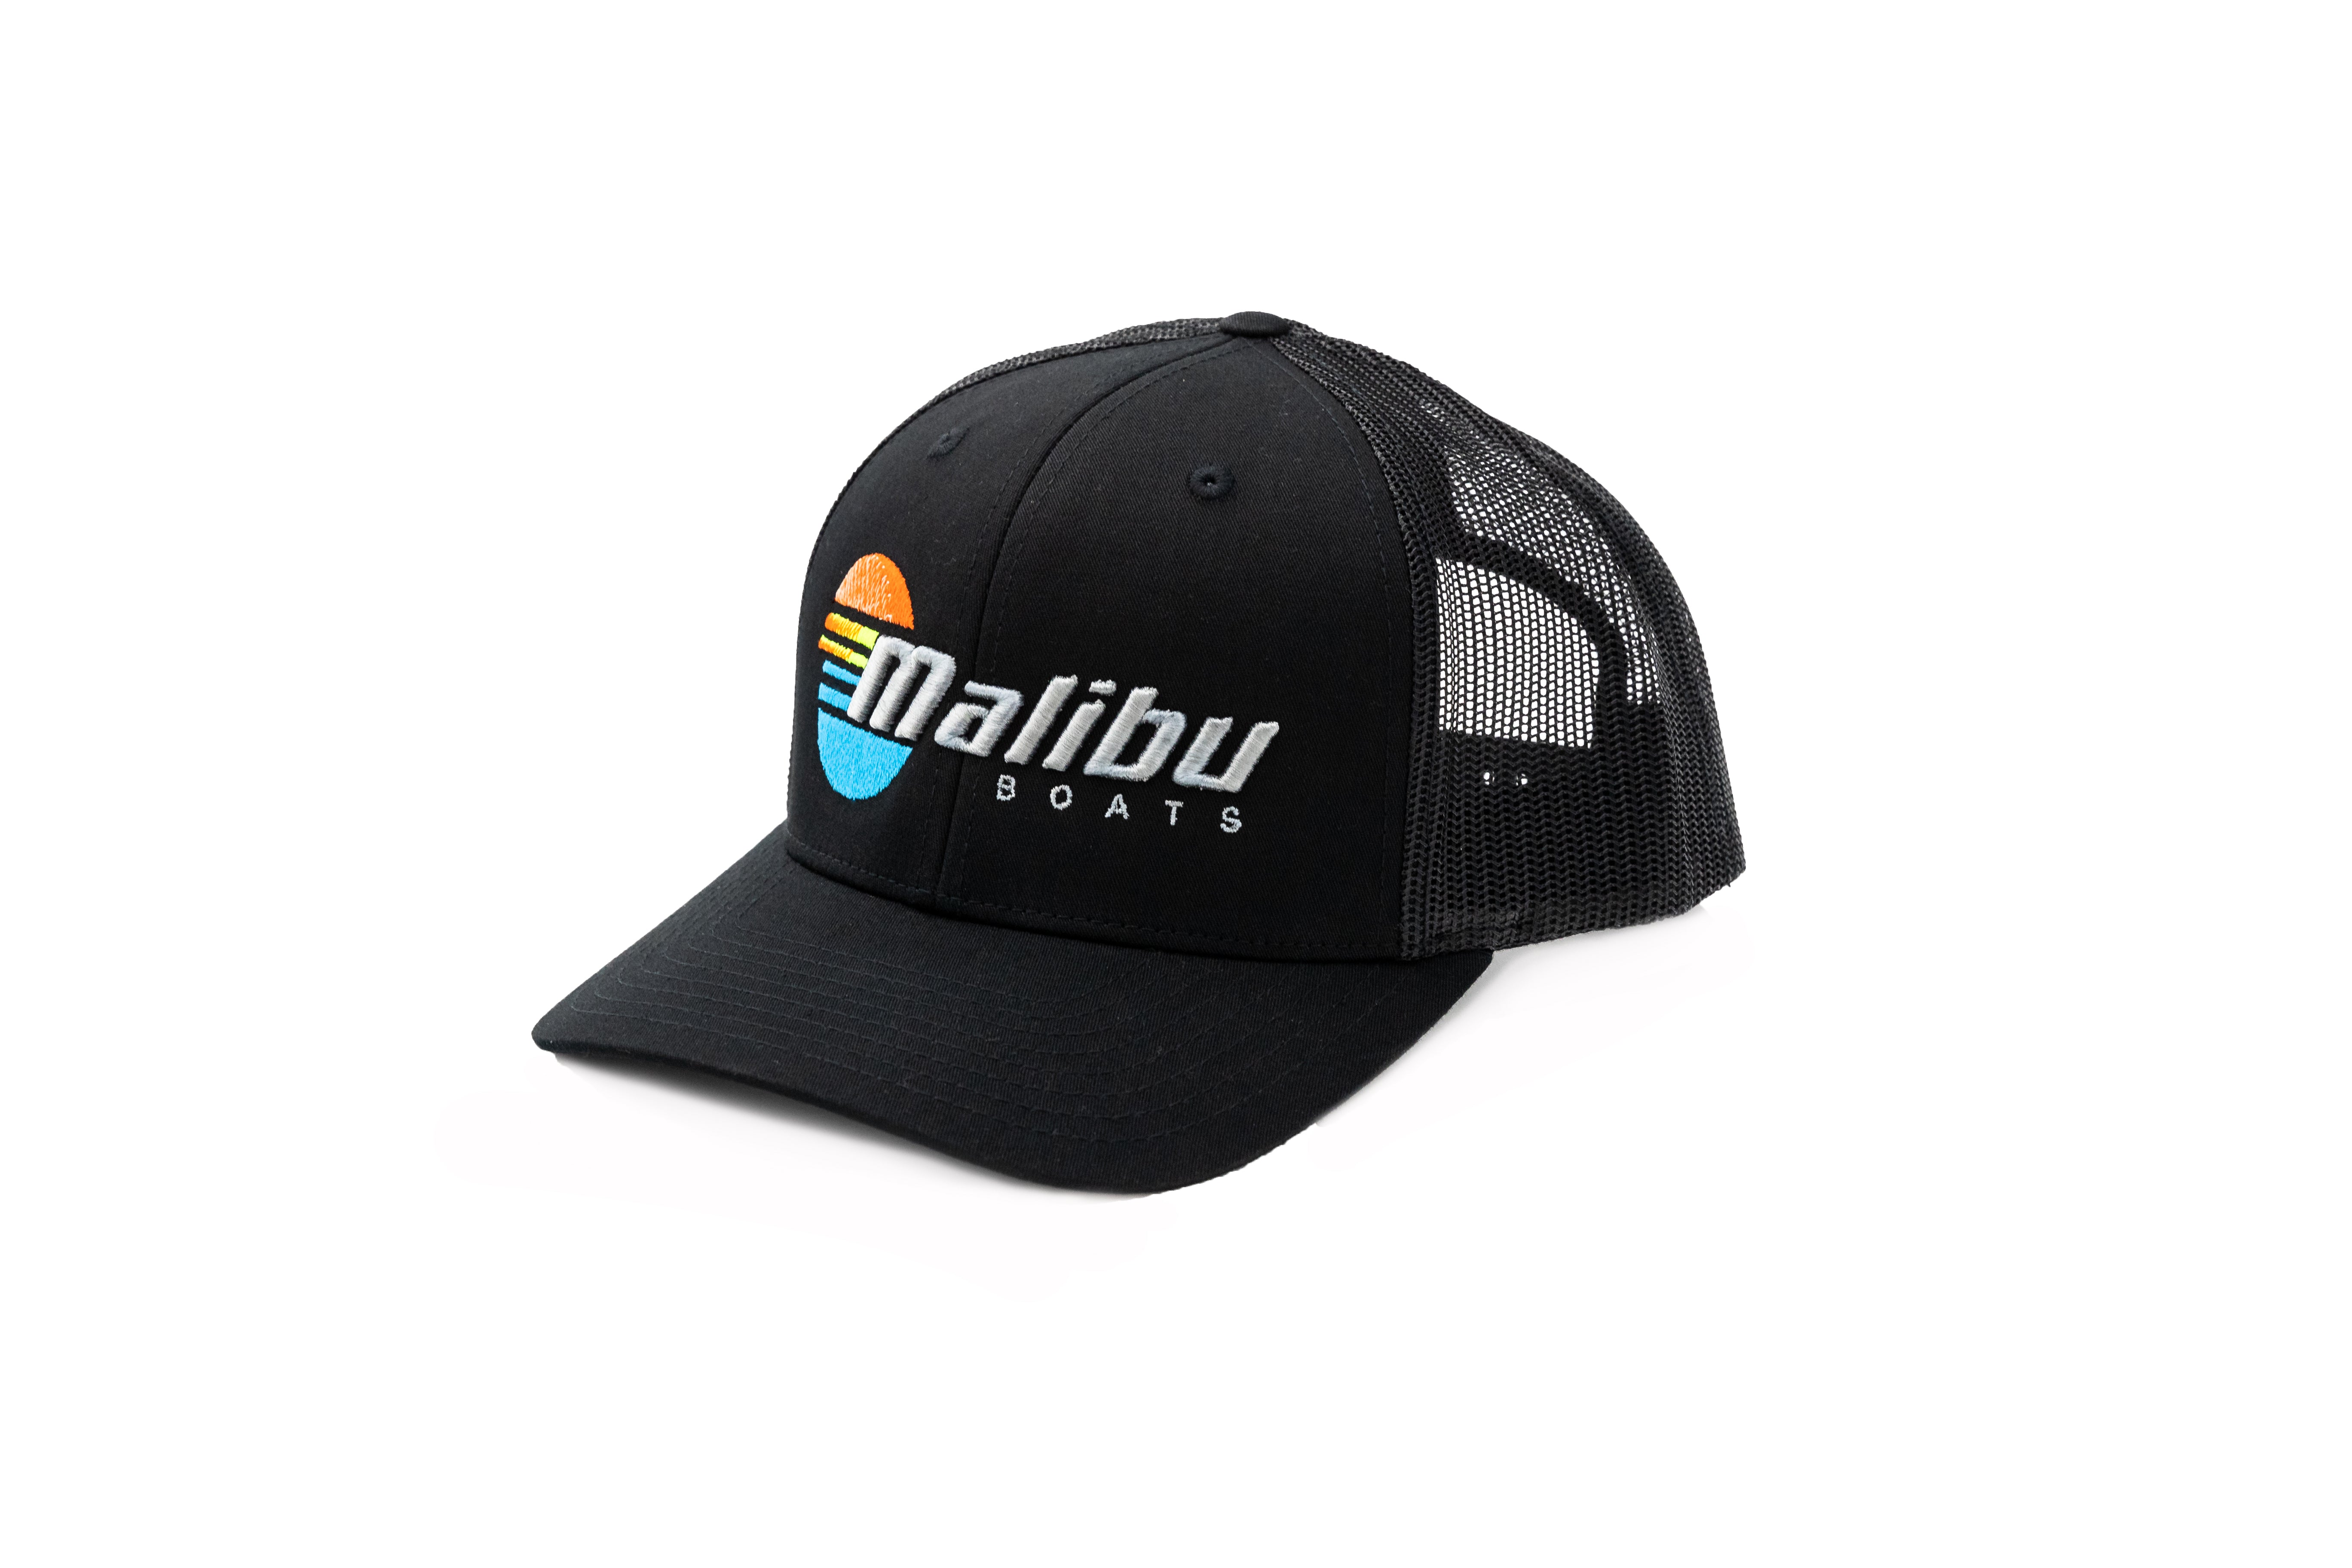 Malibu Trucker Hat